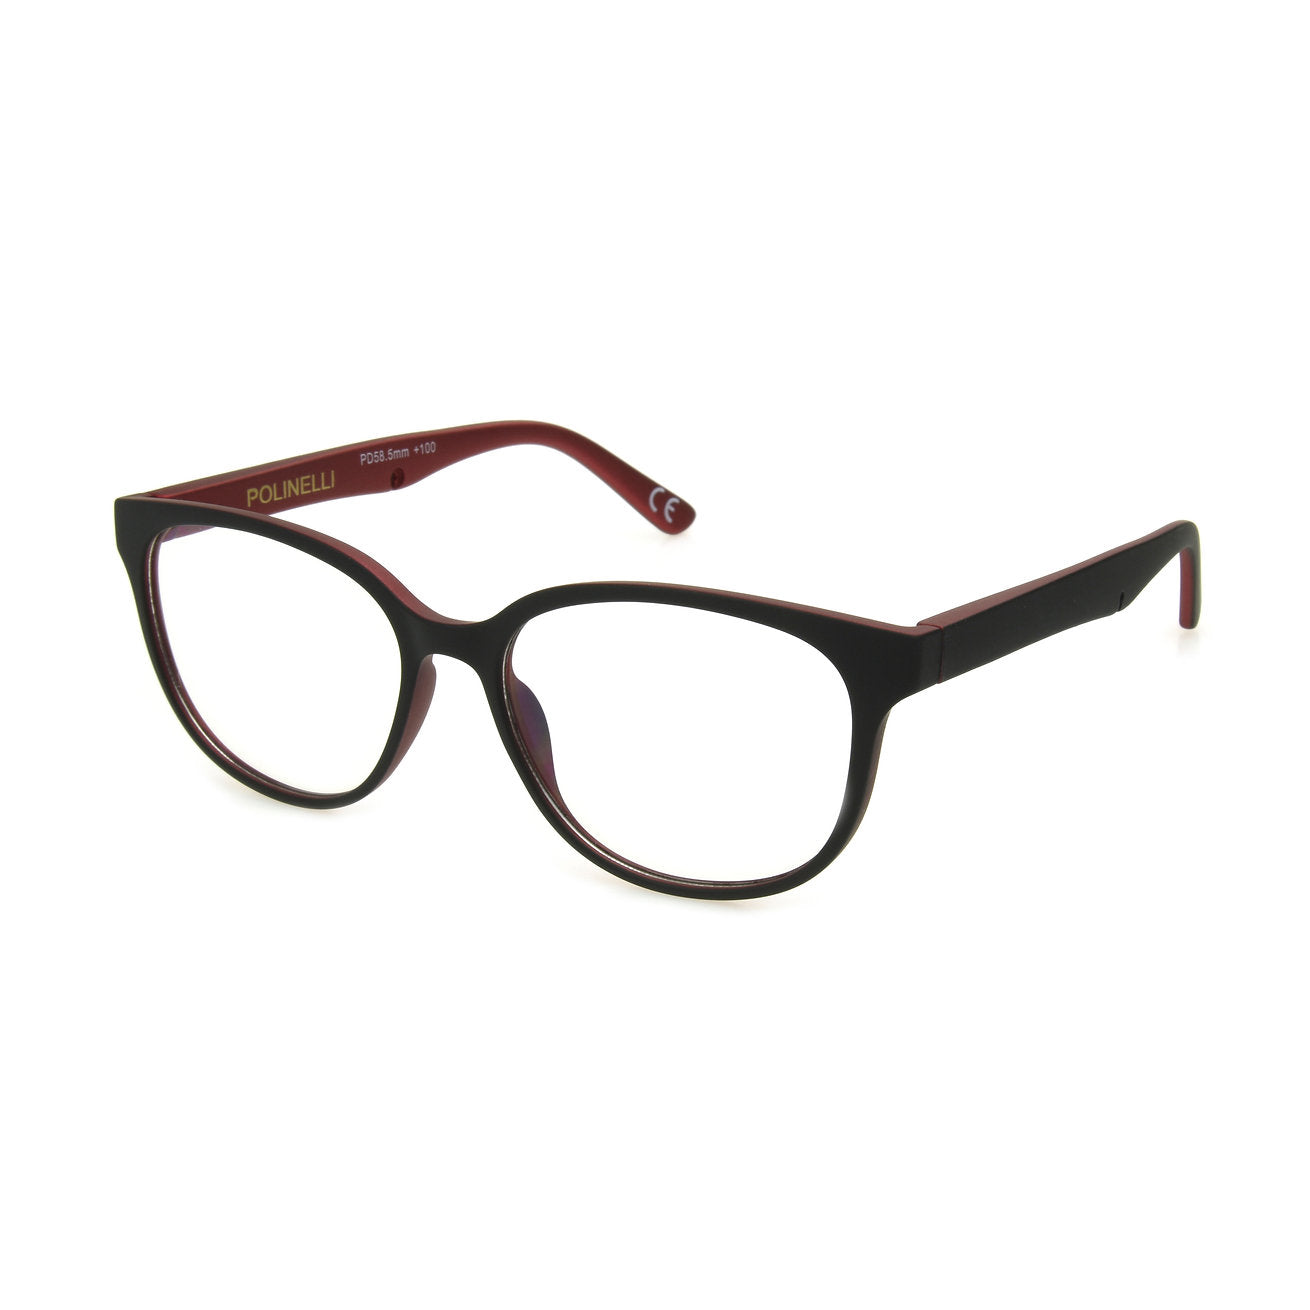 Polinelli eyeglasses model P202 black and red